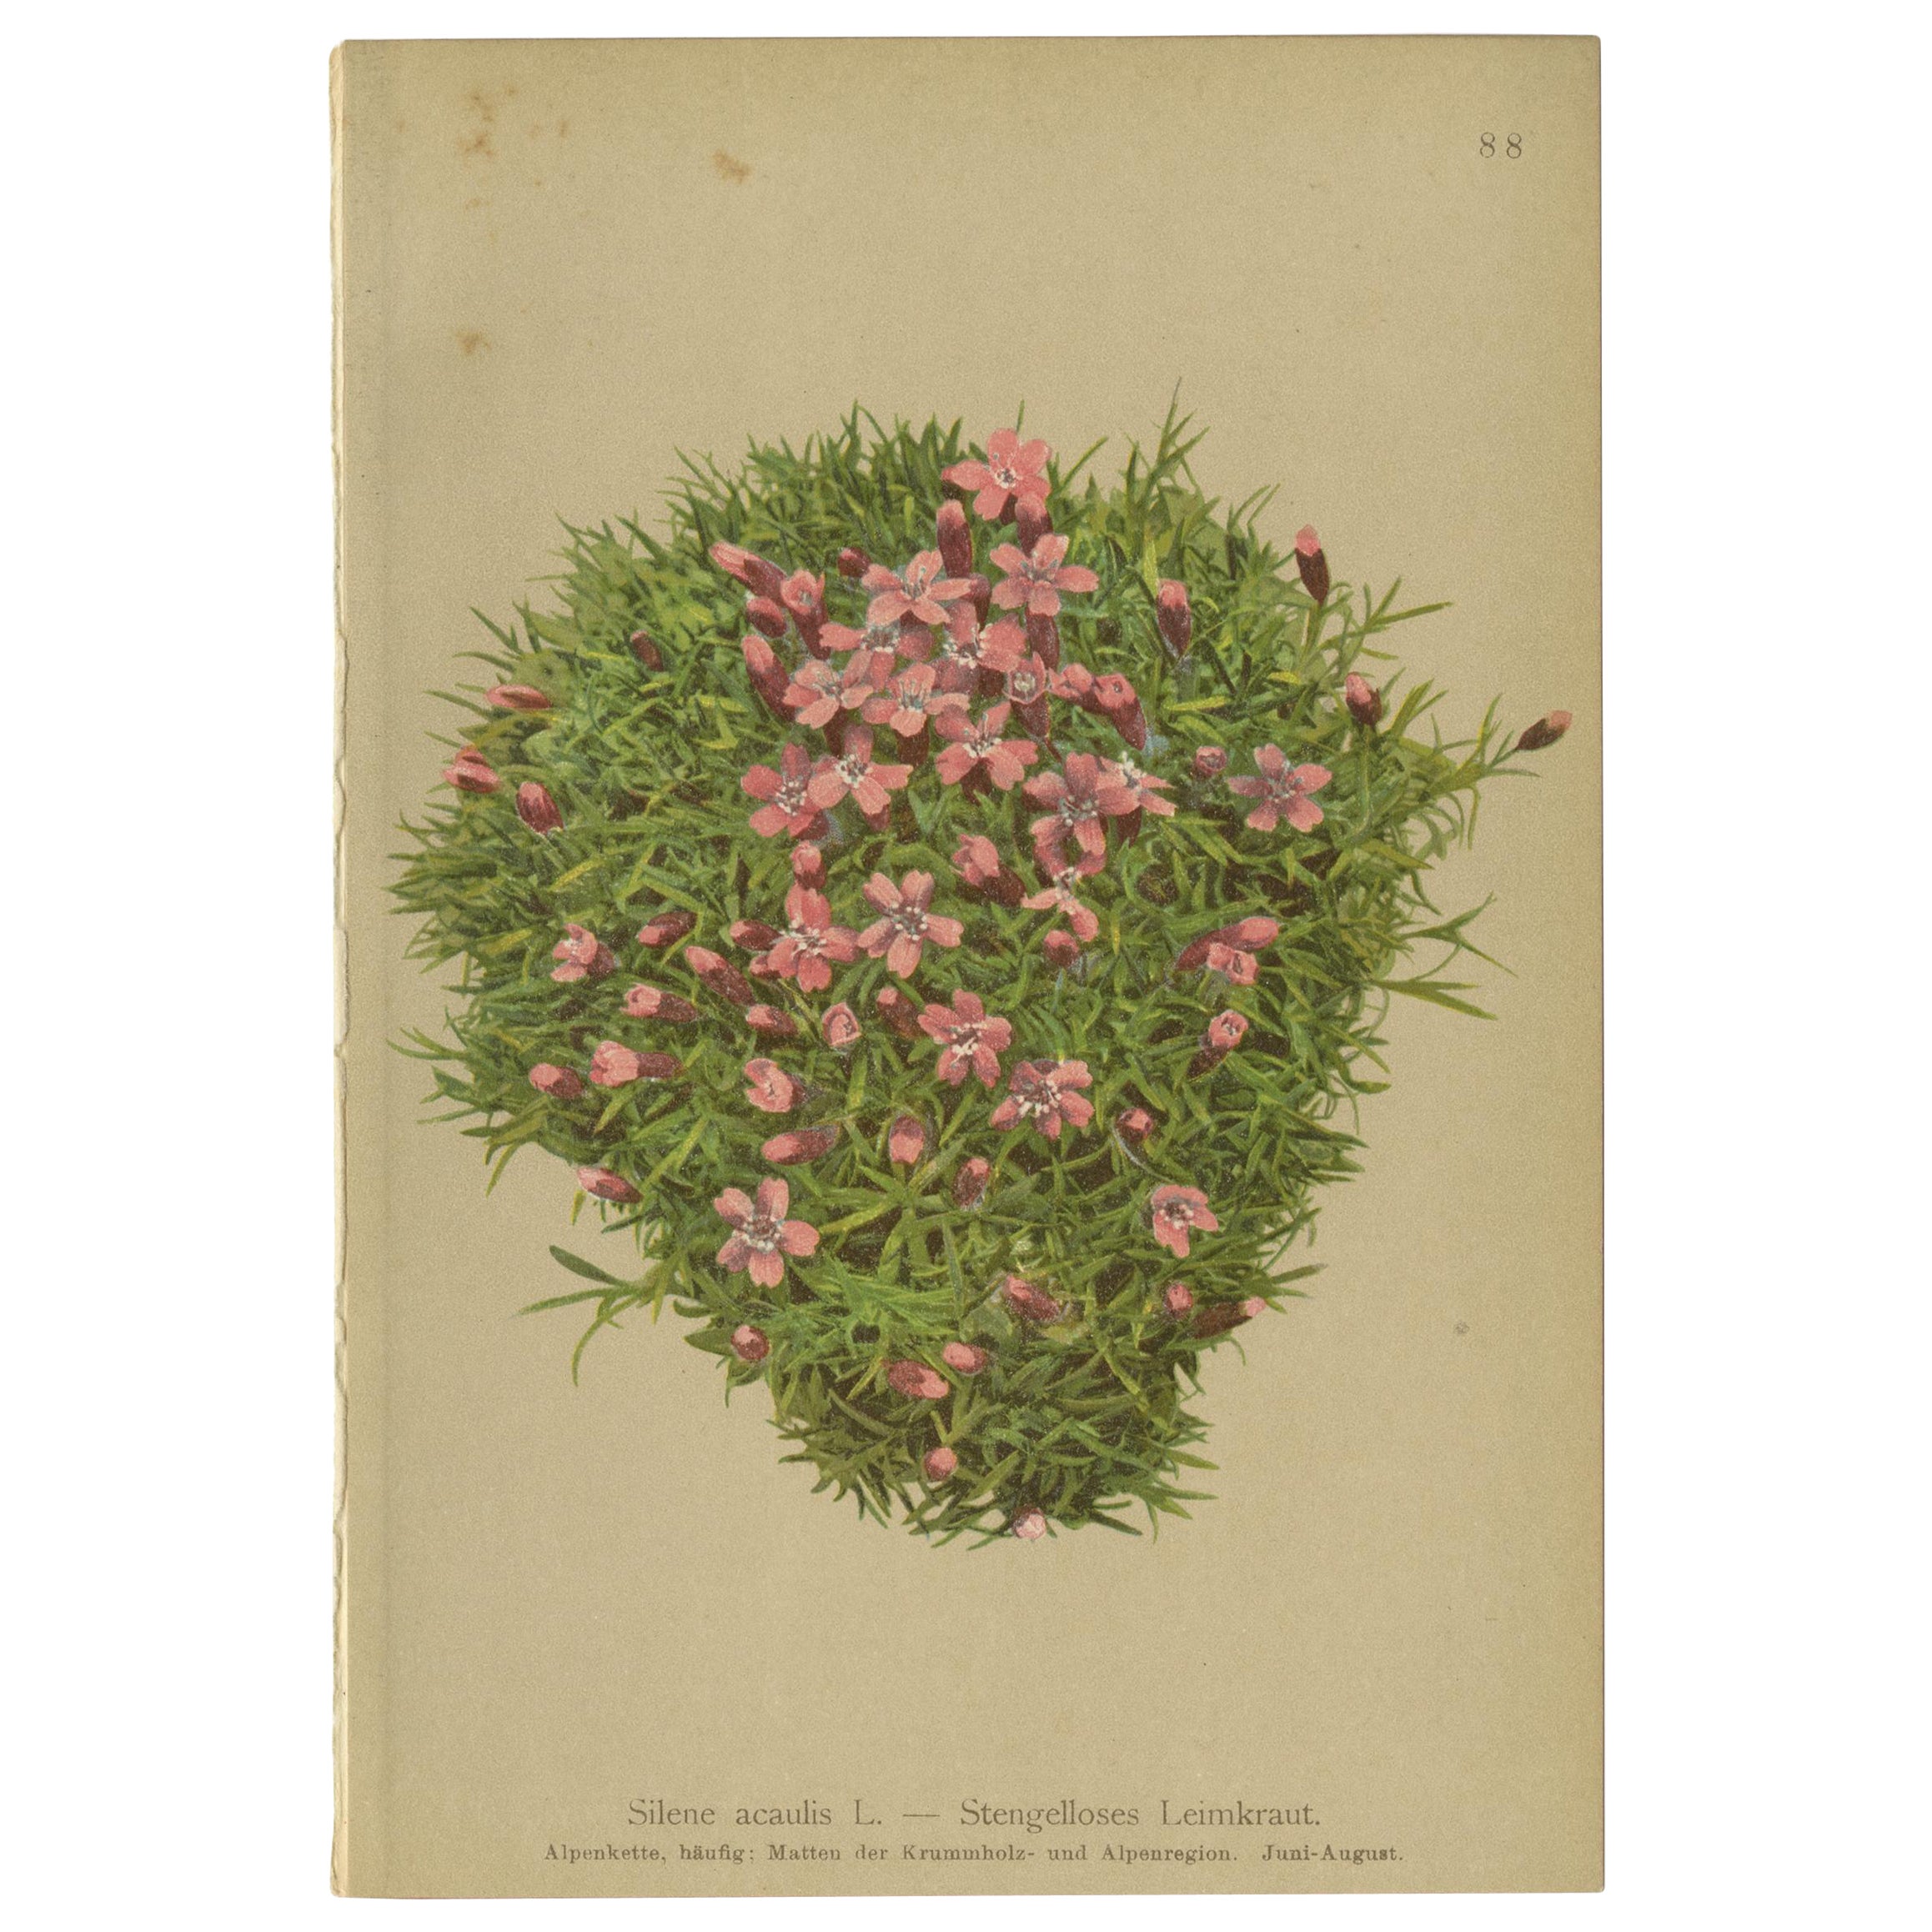 Antique Botany Print of The Silene Acaulis Plant by Palla, 1897